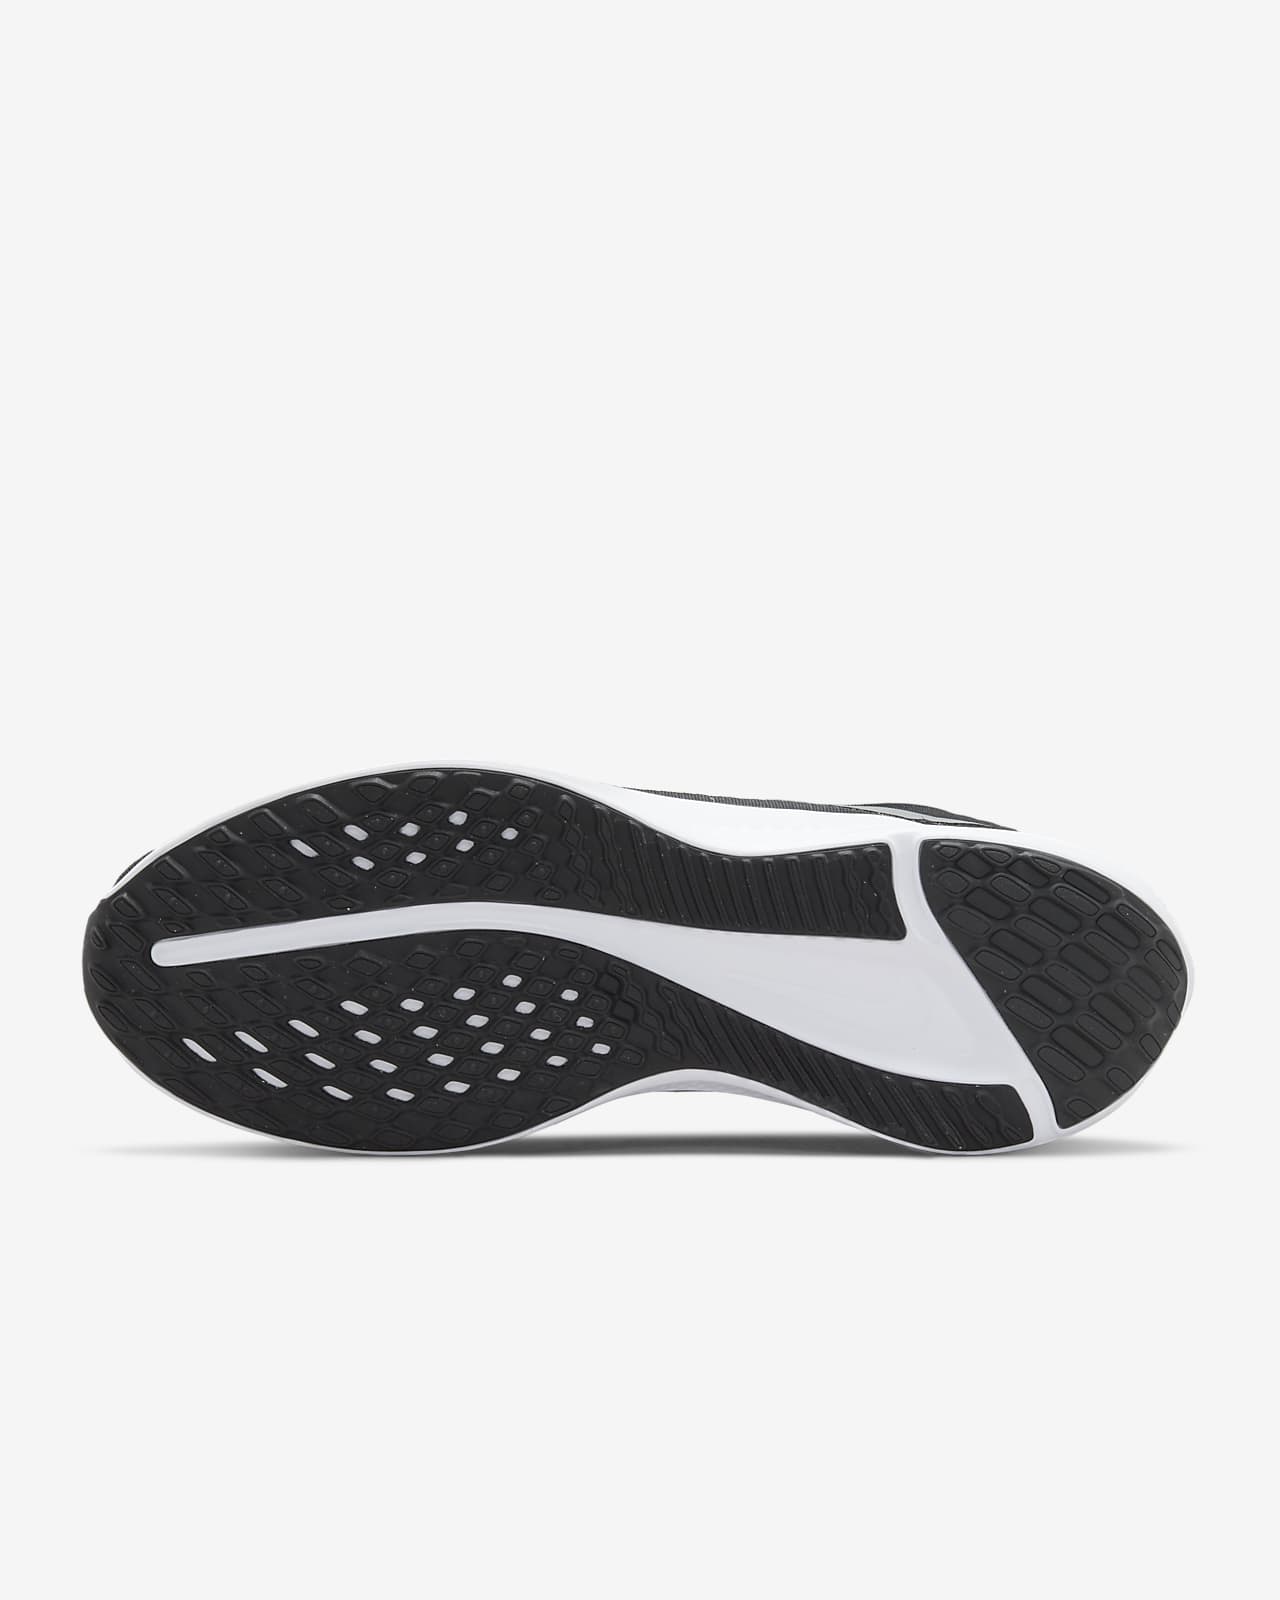 Keep white or go black laces? : r/Nike